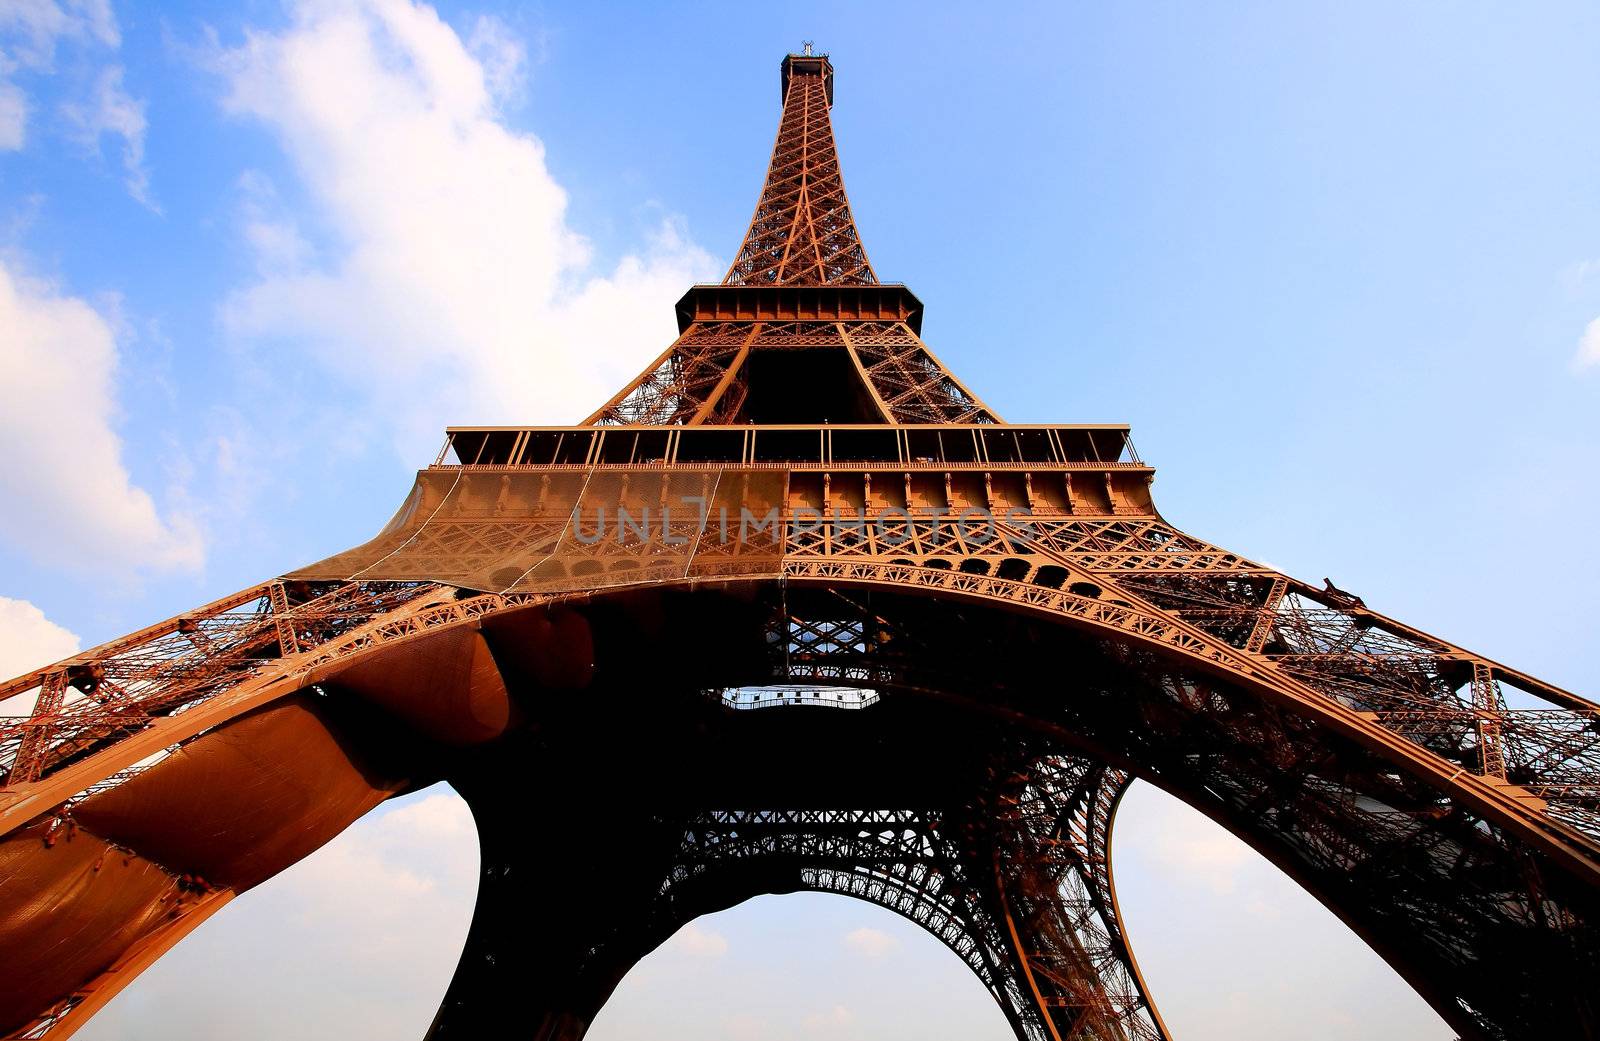 Eiffel tower Paris France by vichie81